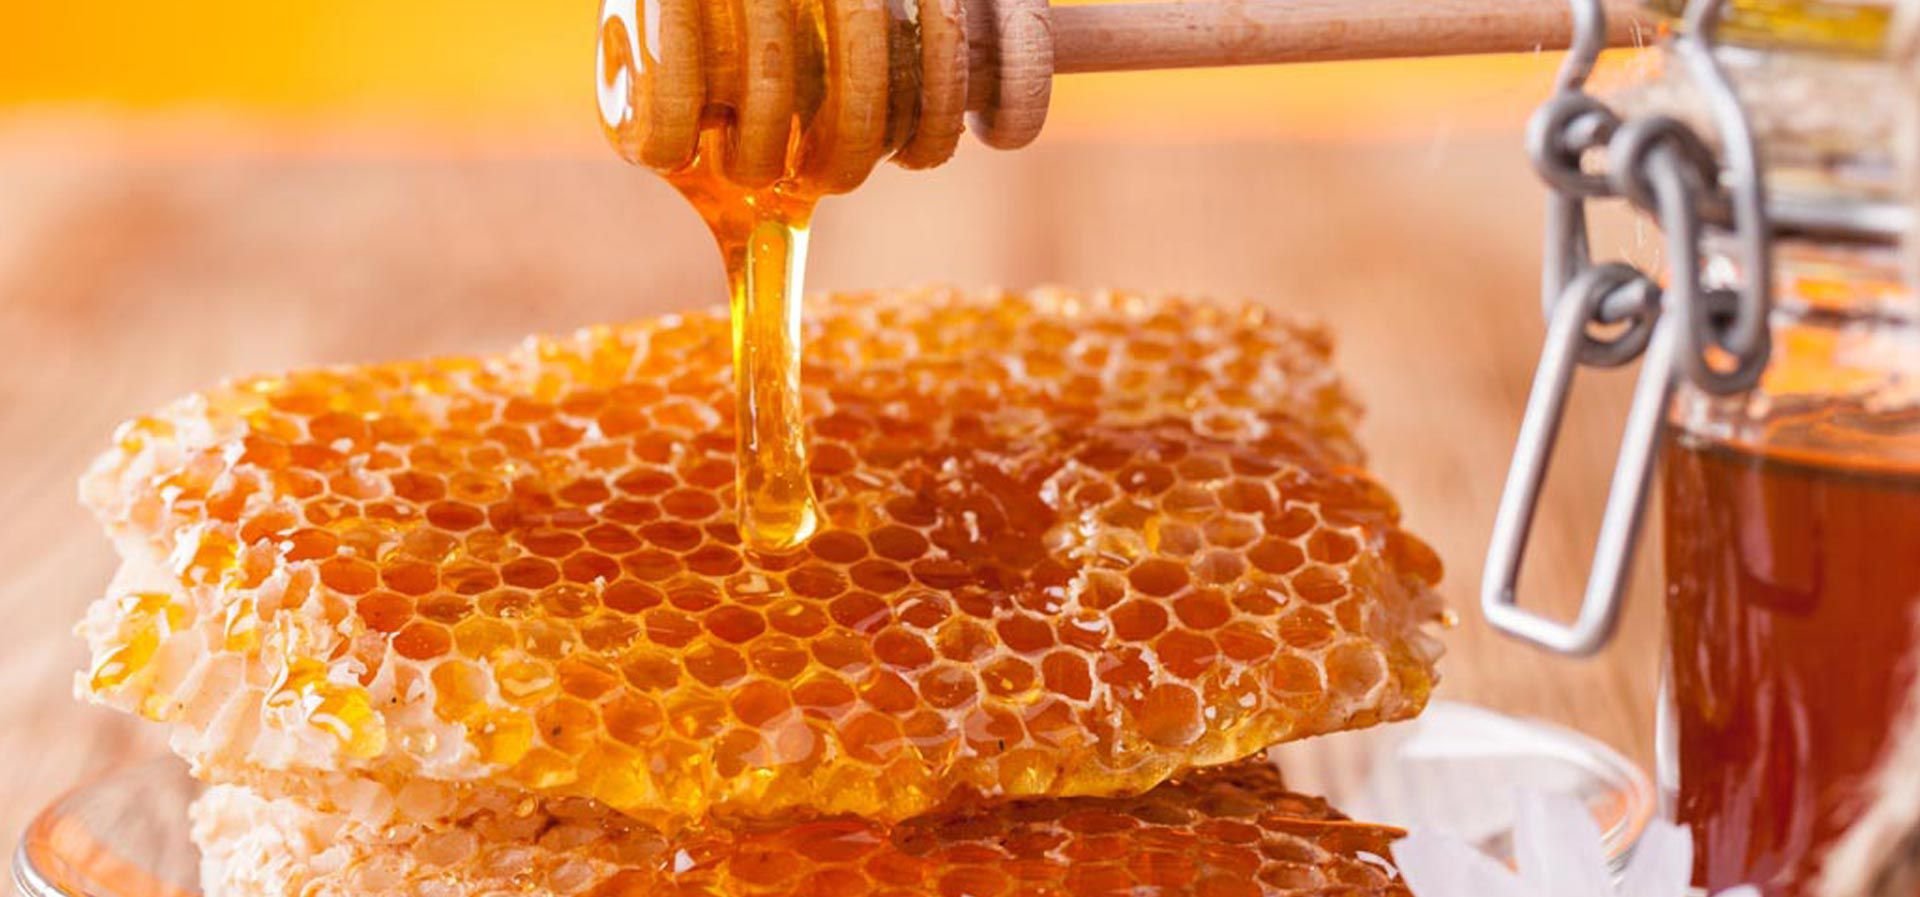 Бешеный мед. Соты меда. Мёд натуральный. Красивый мед. Пчелиный мёд.